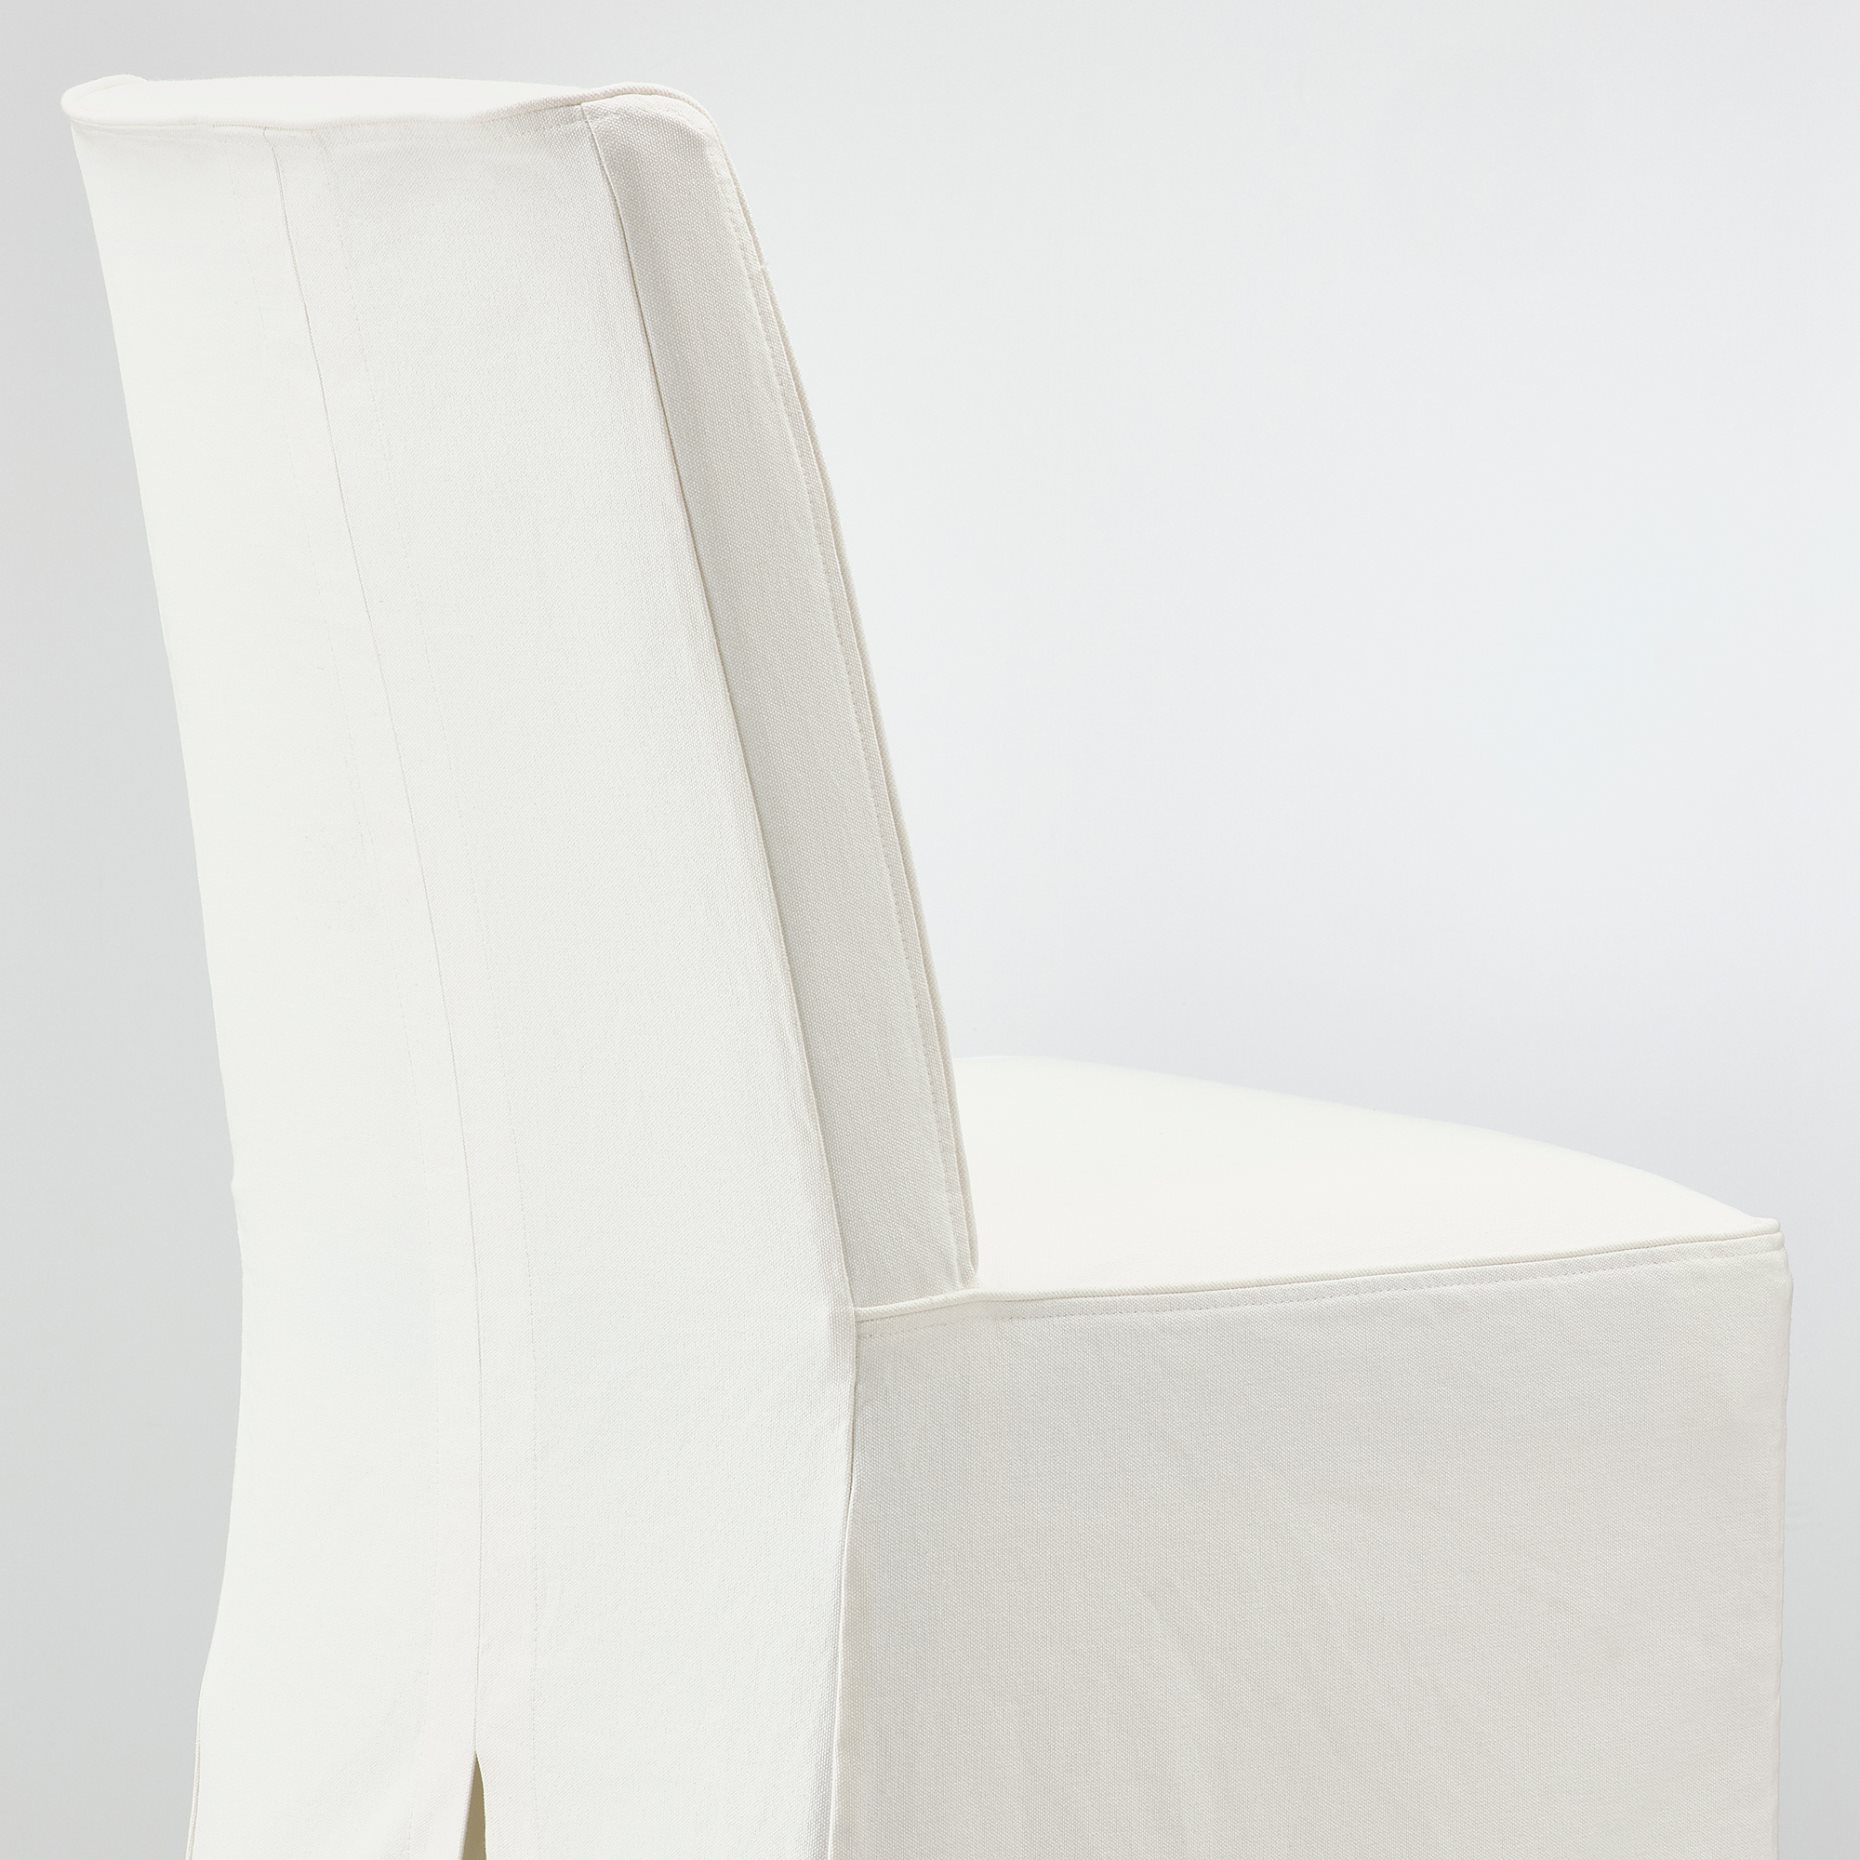 BERGMUND, chair with medium long cover, 993.845.94